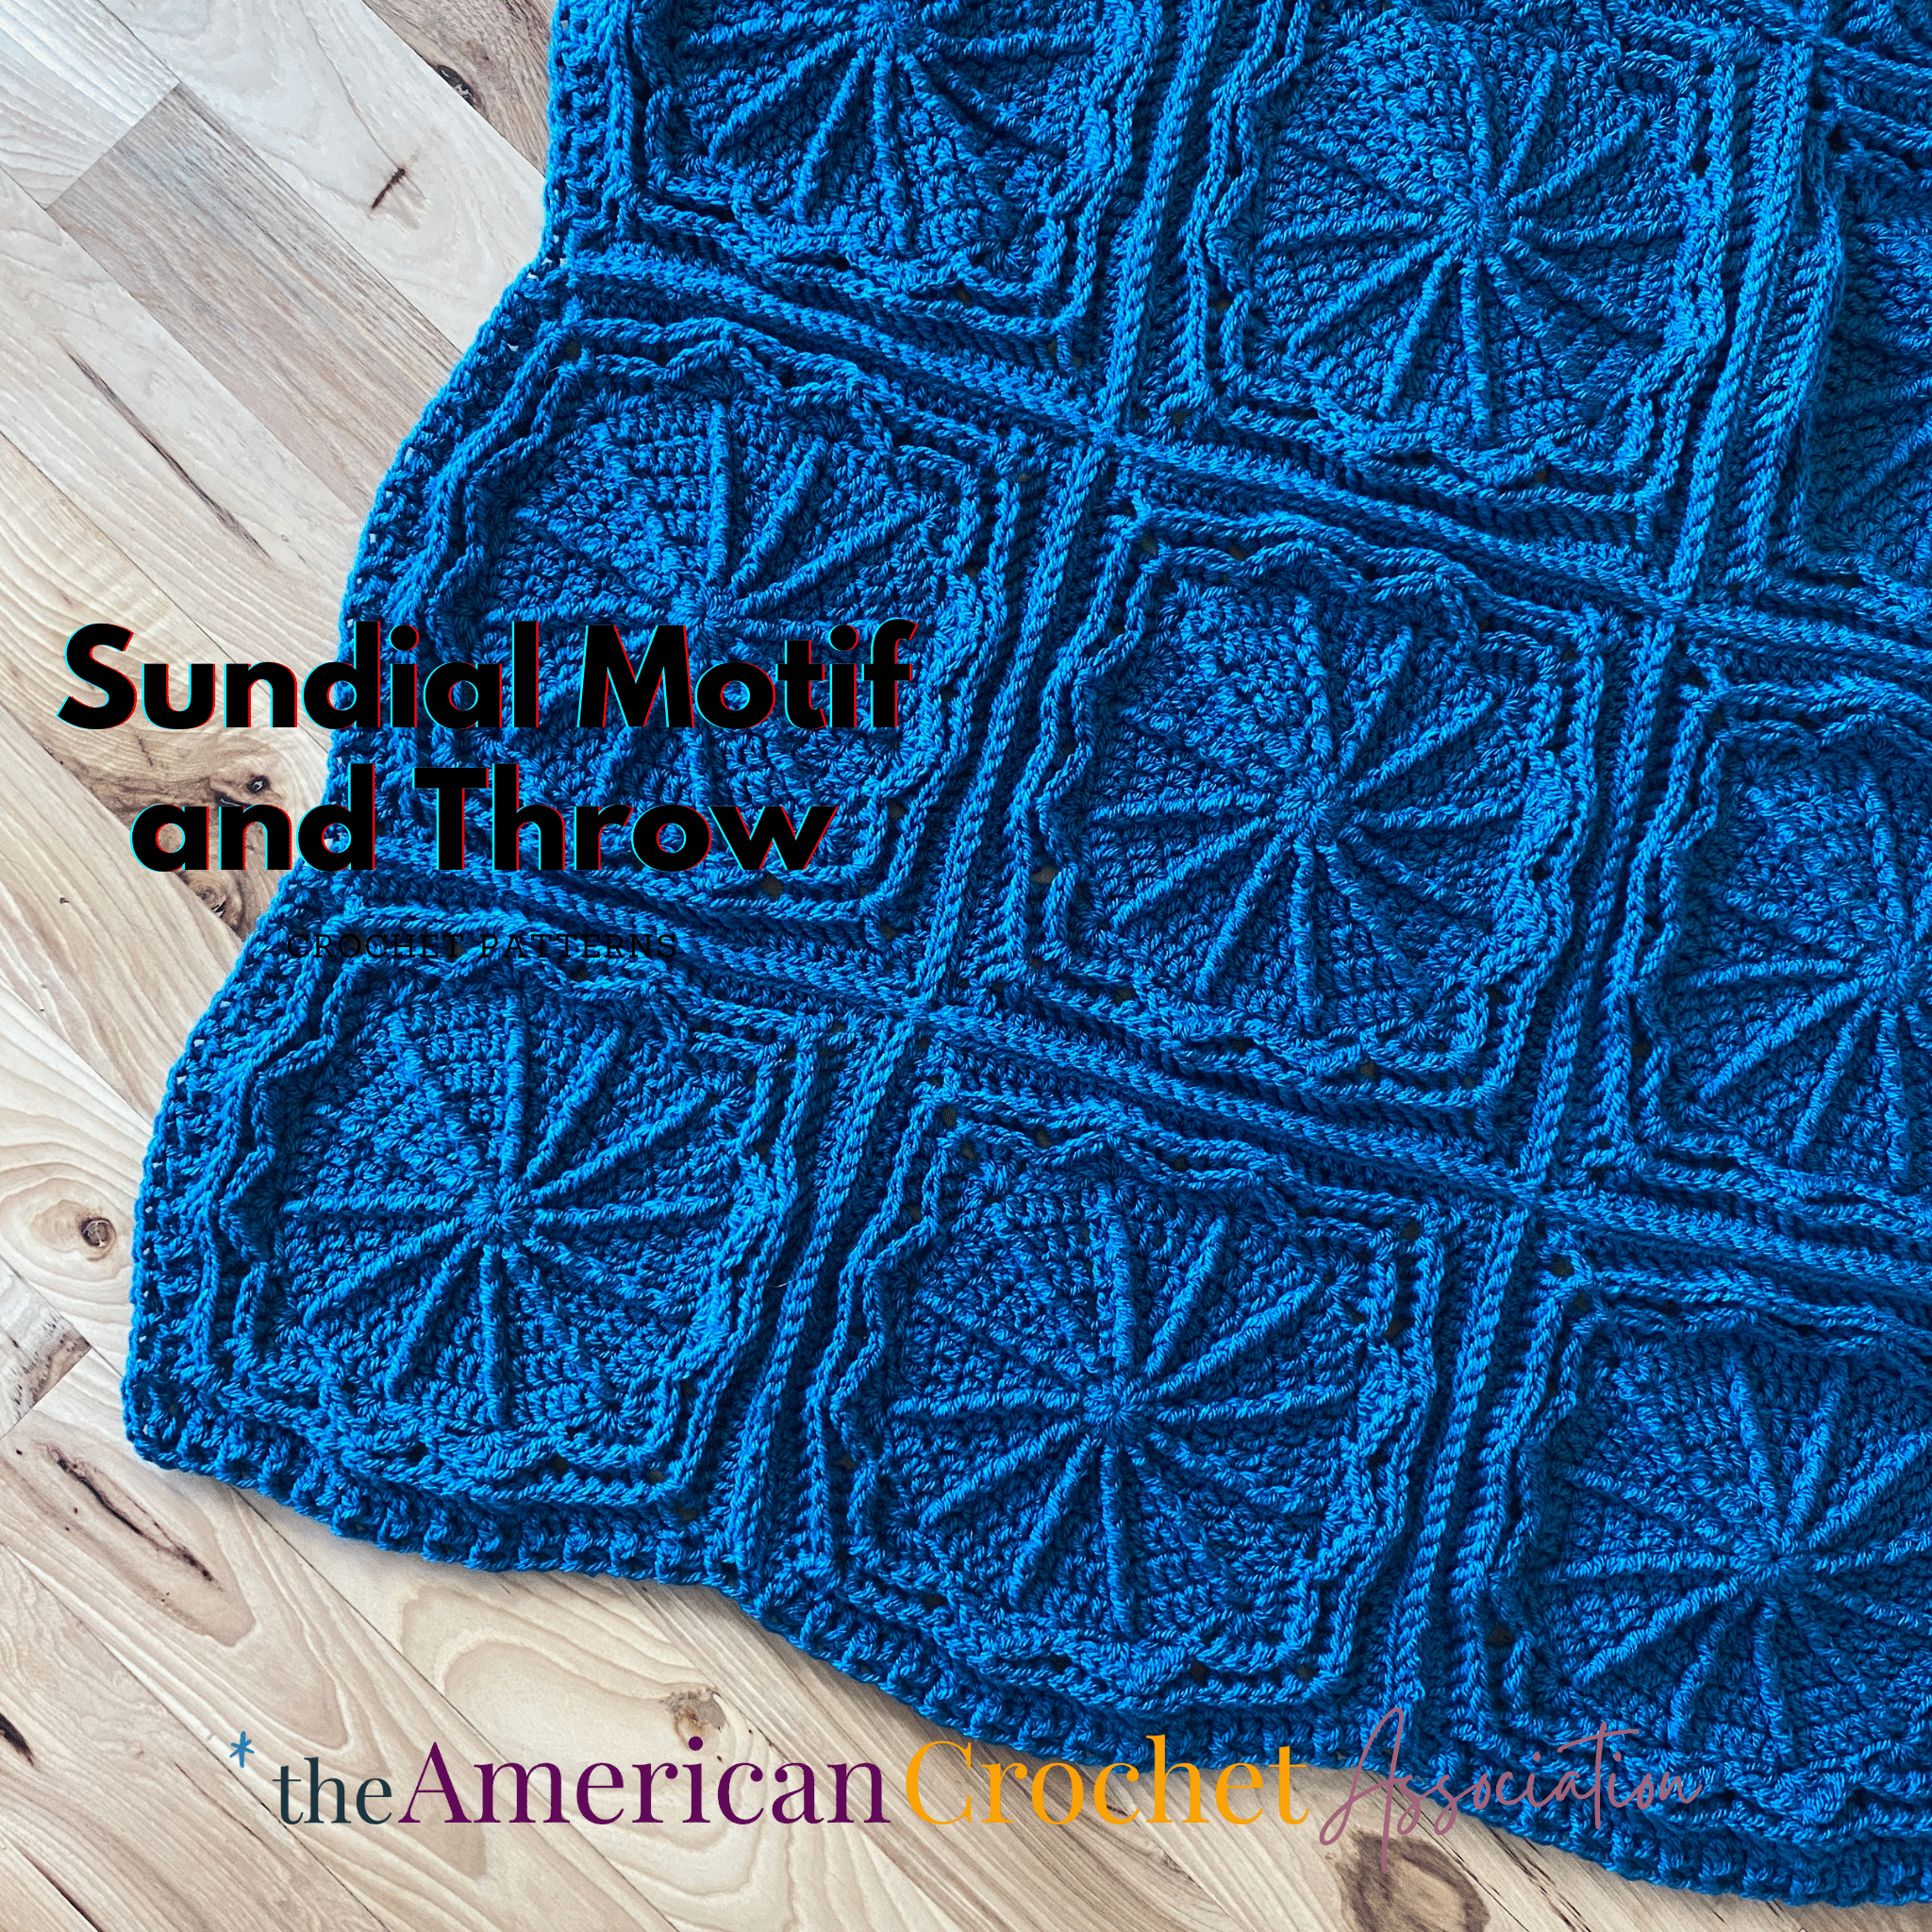 Sundial Motif and Throw Crochet Pattern on wooden floor - American Crochet Association (1)